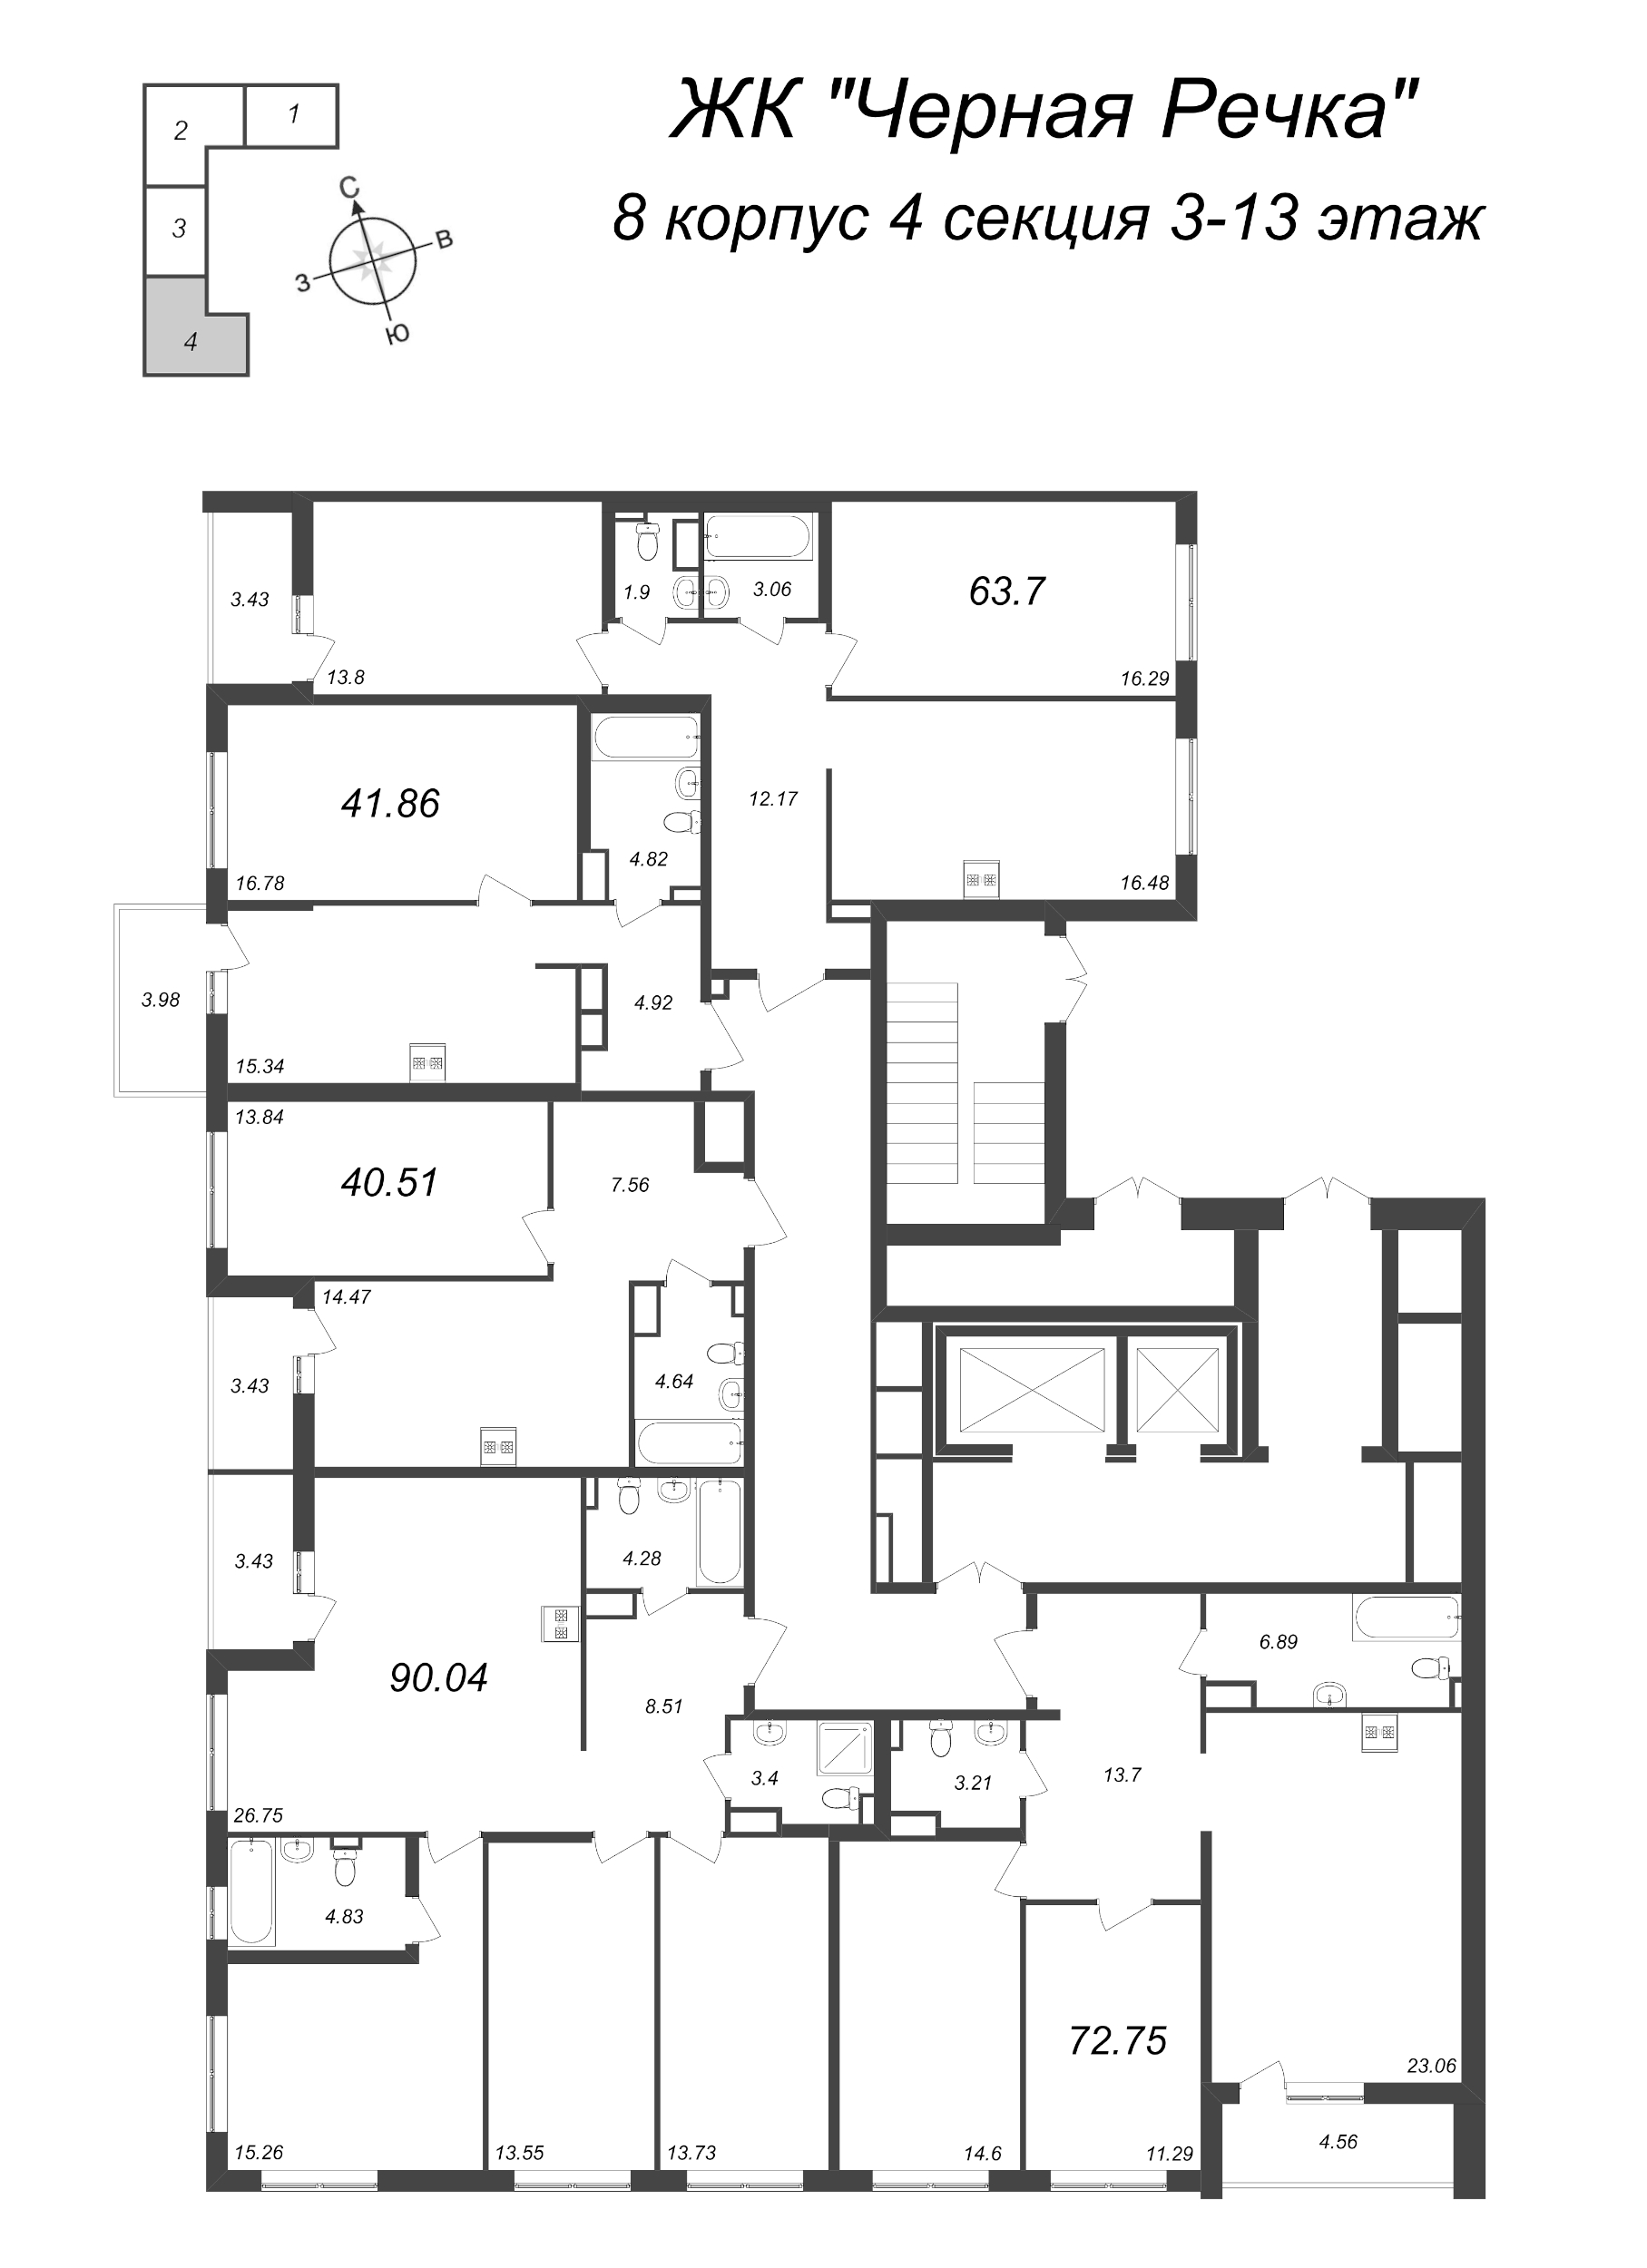 1-комнатная квартира, 41.86 м² в ЖК "Чёрная речка от Ильича" - планировка этажа